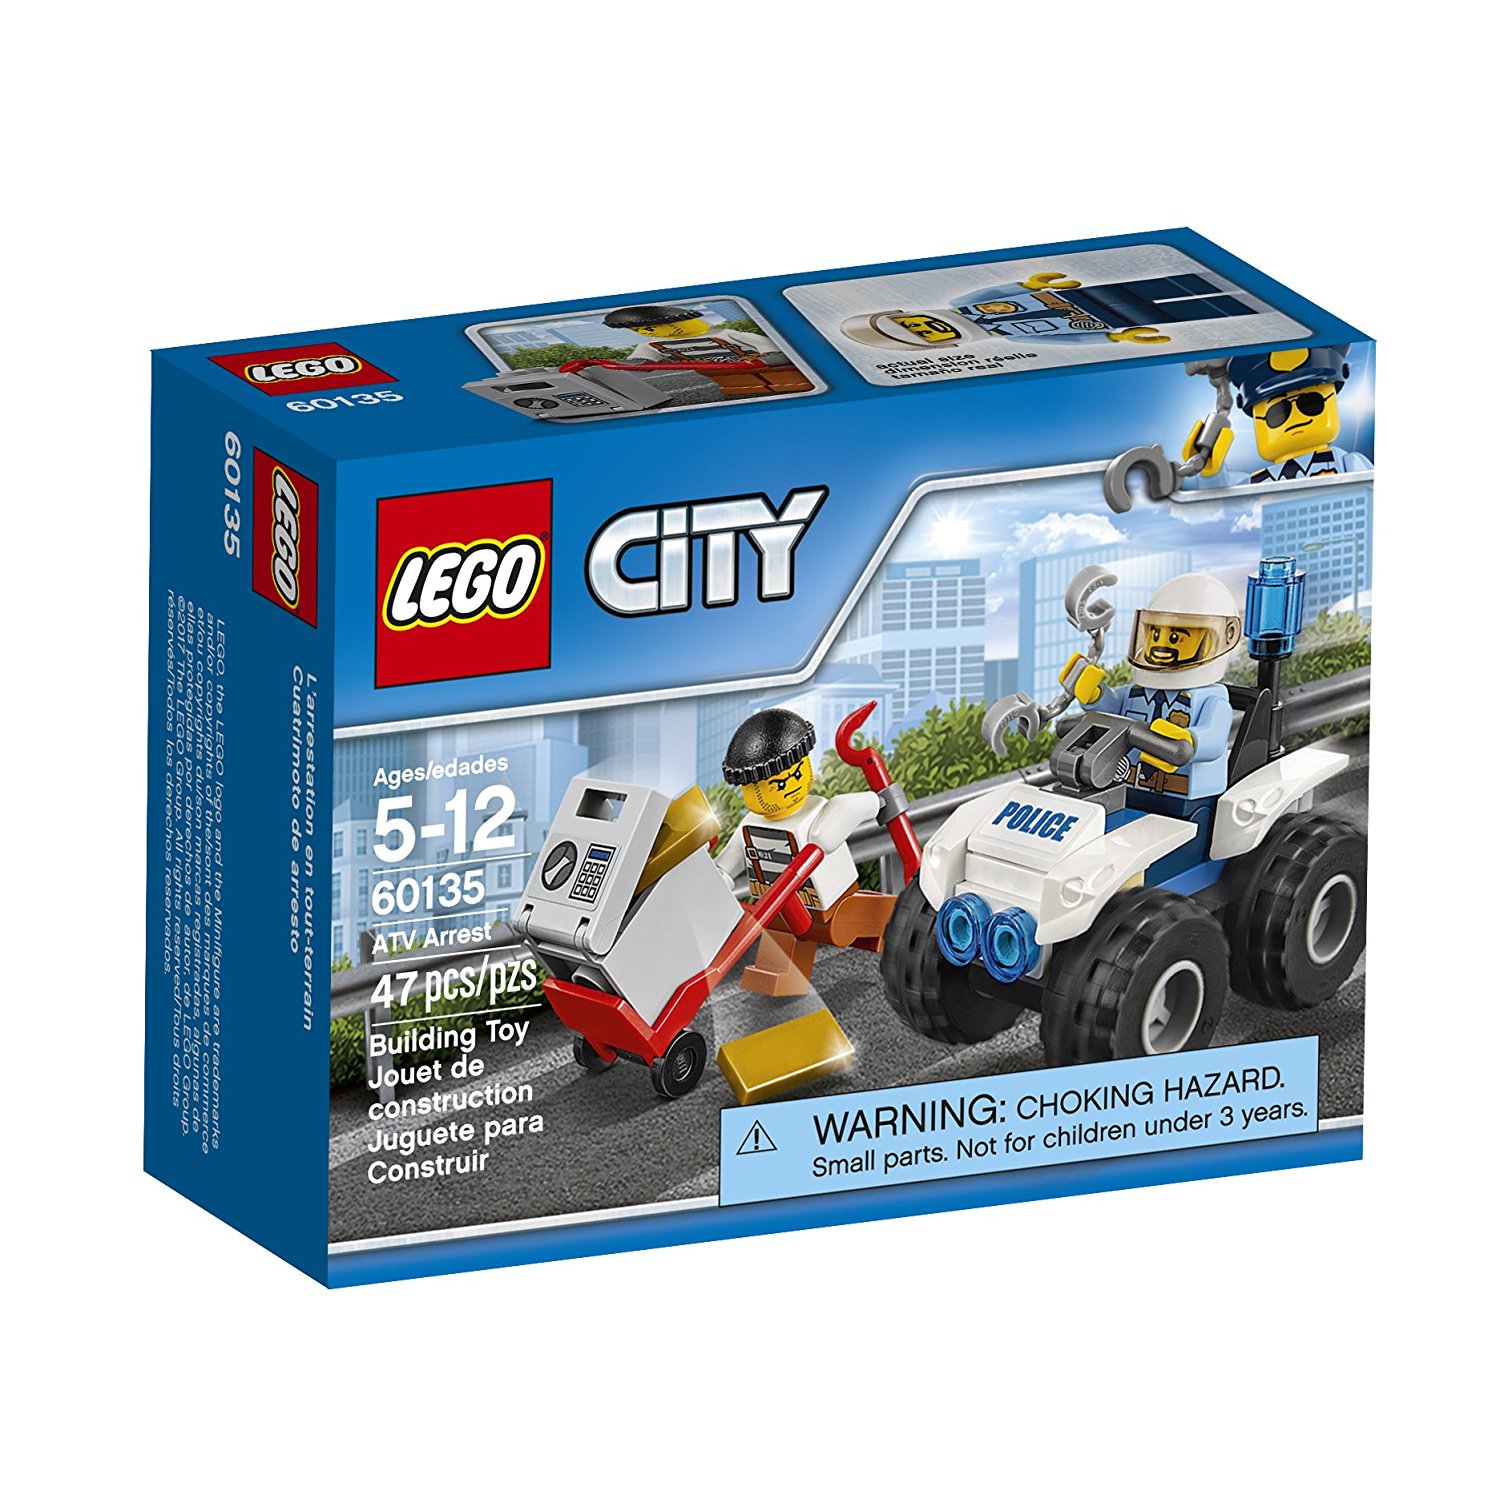 Amazon: LEGO City Police ATV Arrest Building Kit Only $5.49!